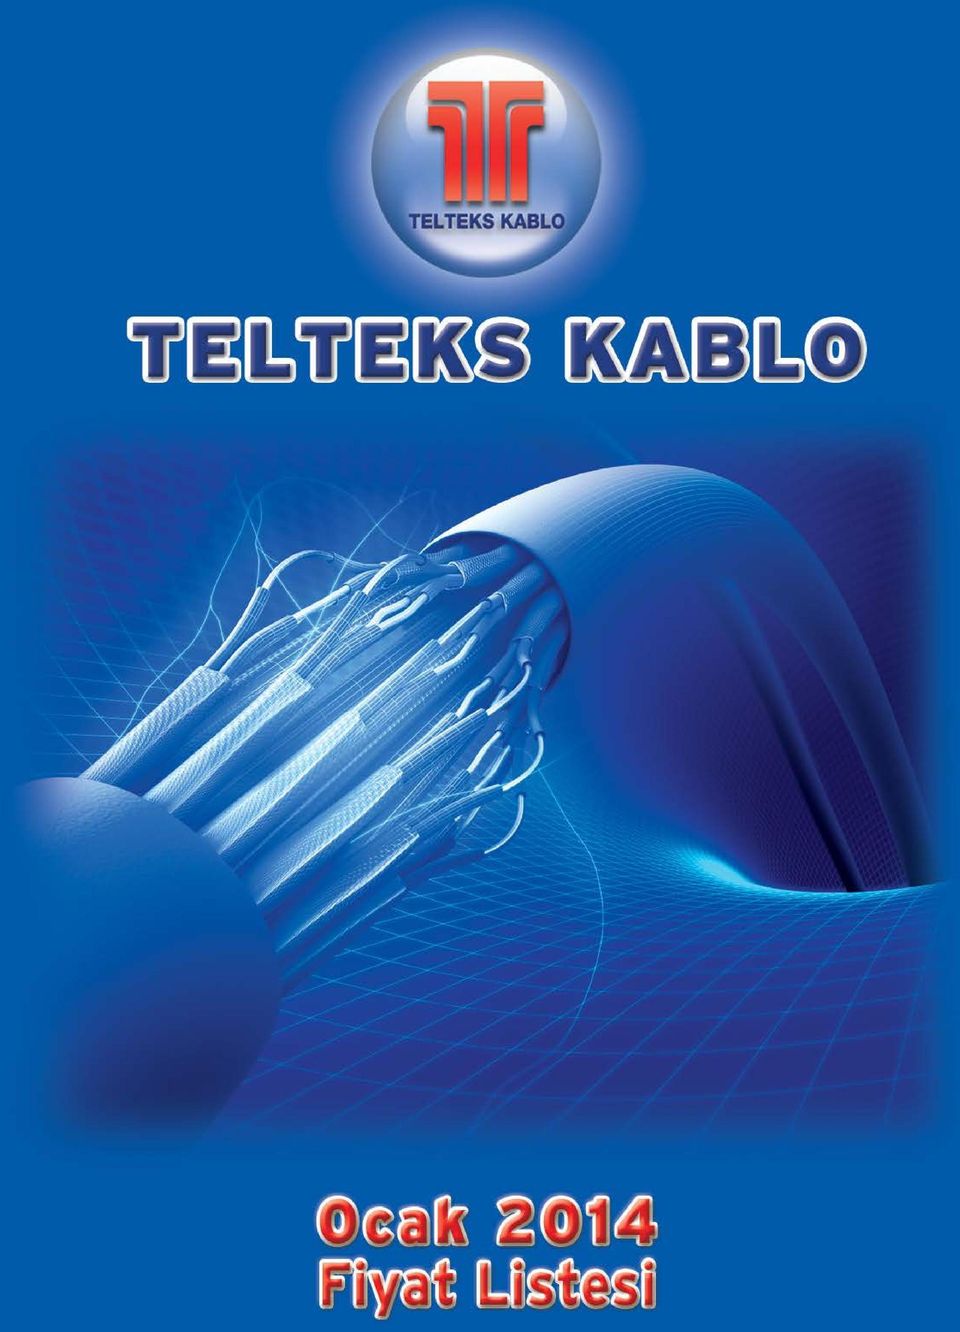 TELTEKS KABLO TSE-ISO-EN PDF Free Download